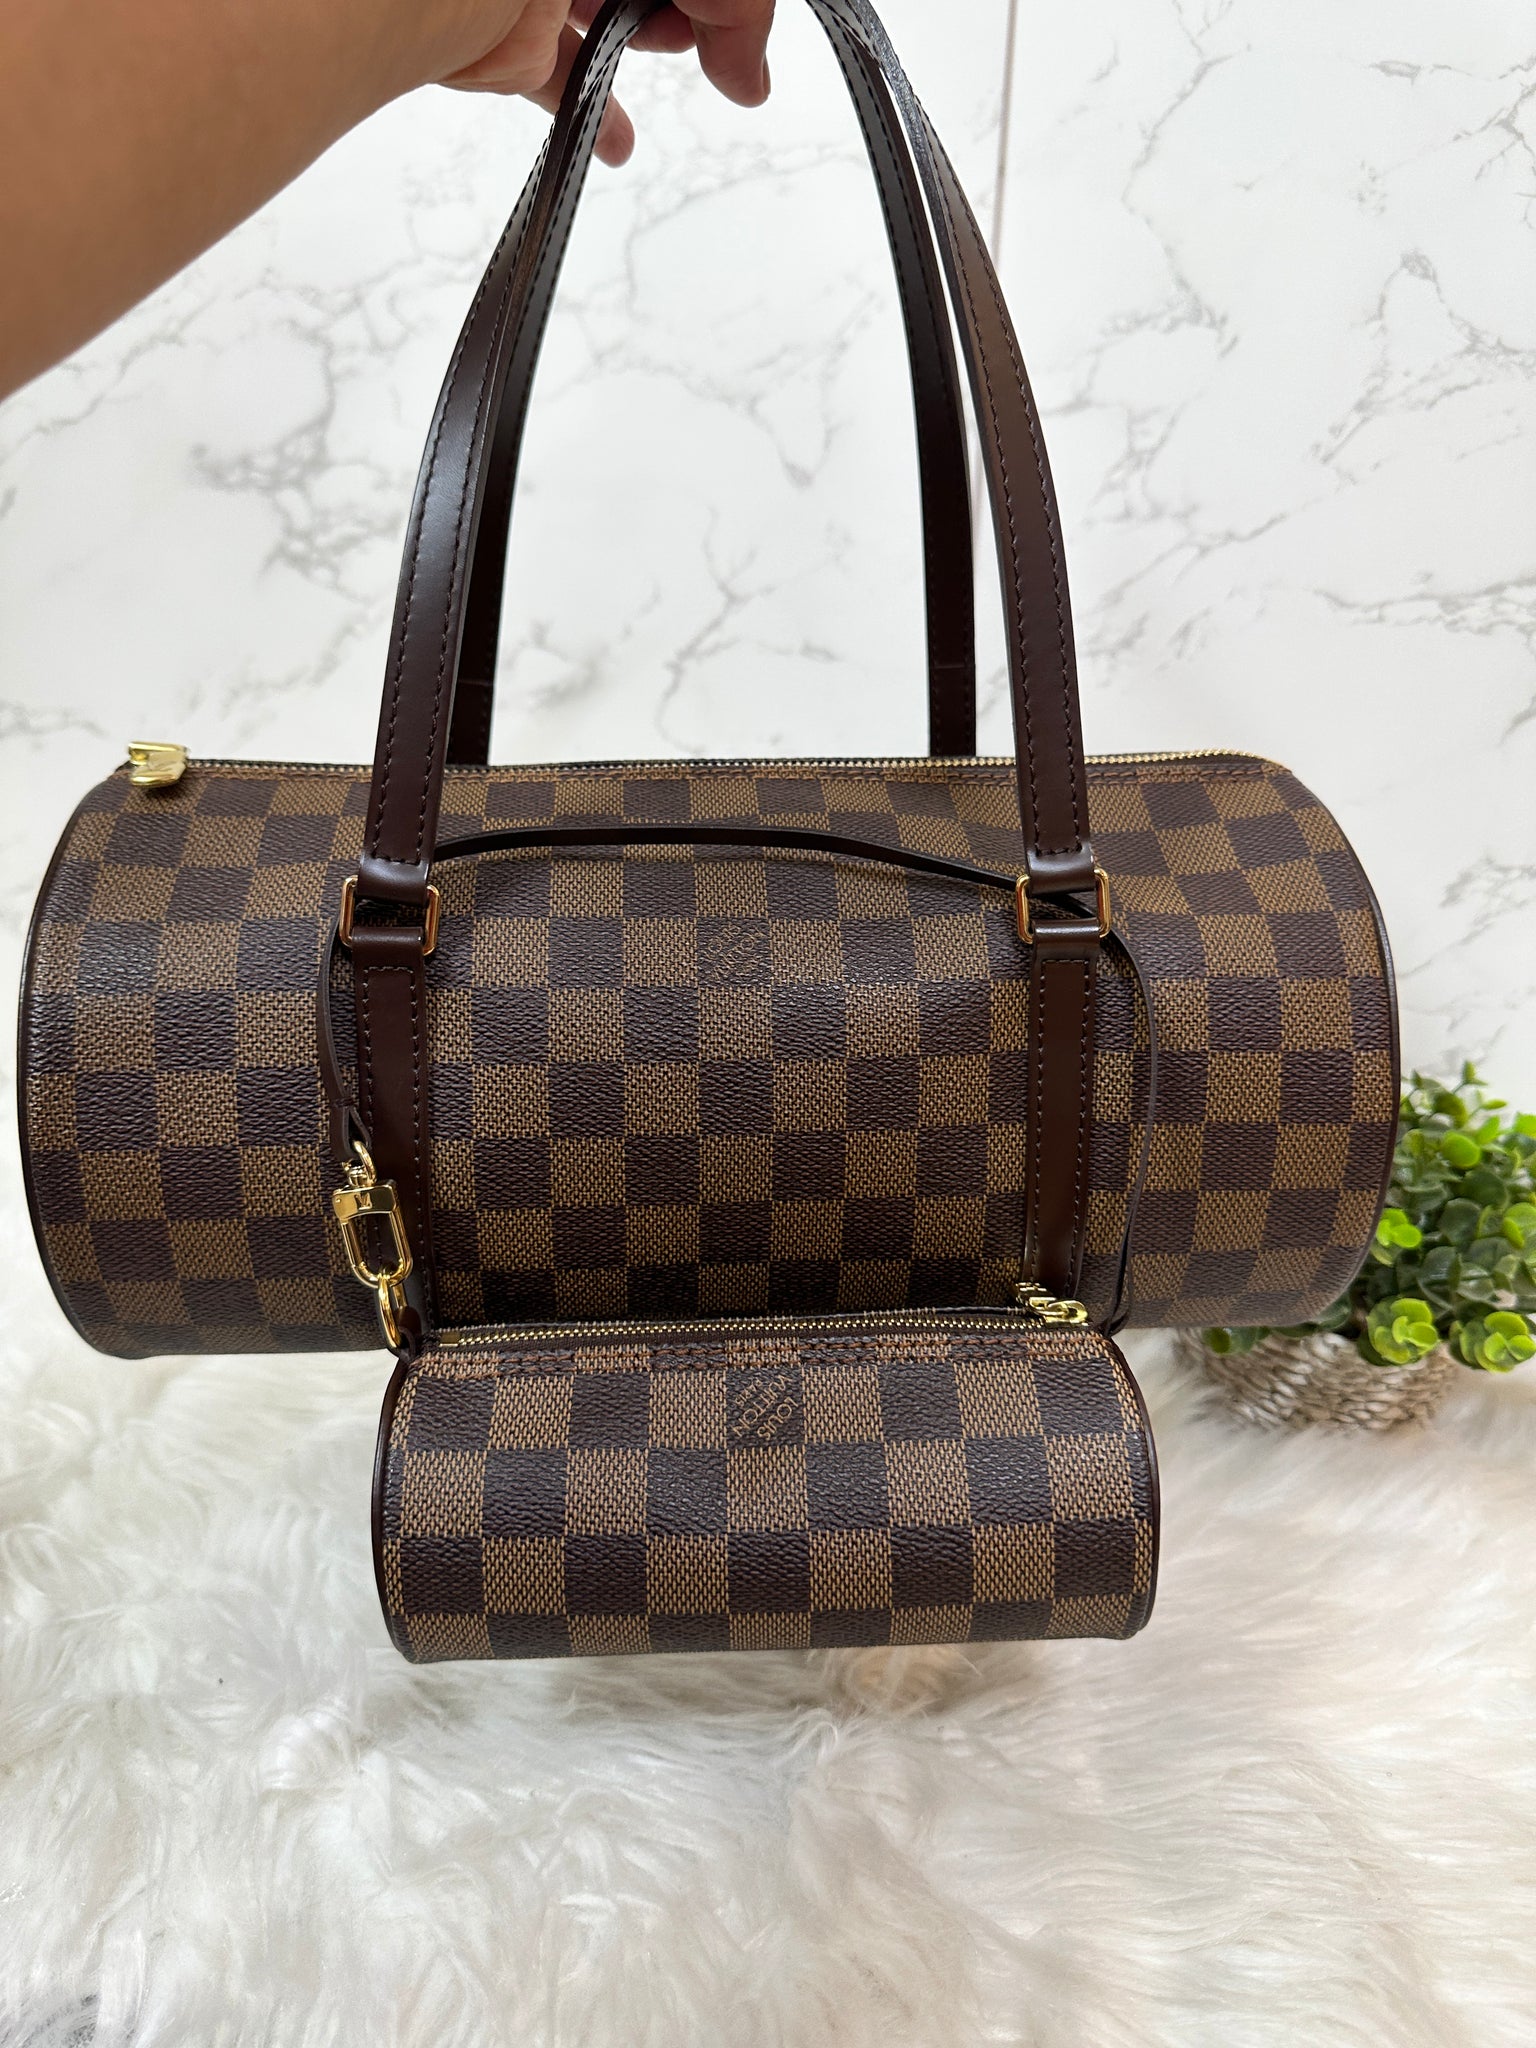 Louis-Vuitton-Damier-Papillon-30-Hand-Bag-&-Pouch-Brown-N51303